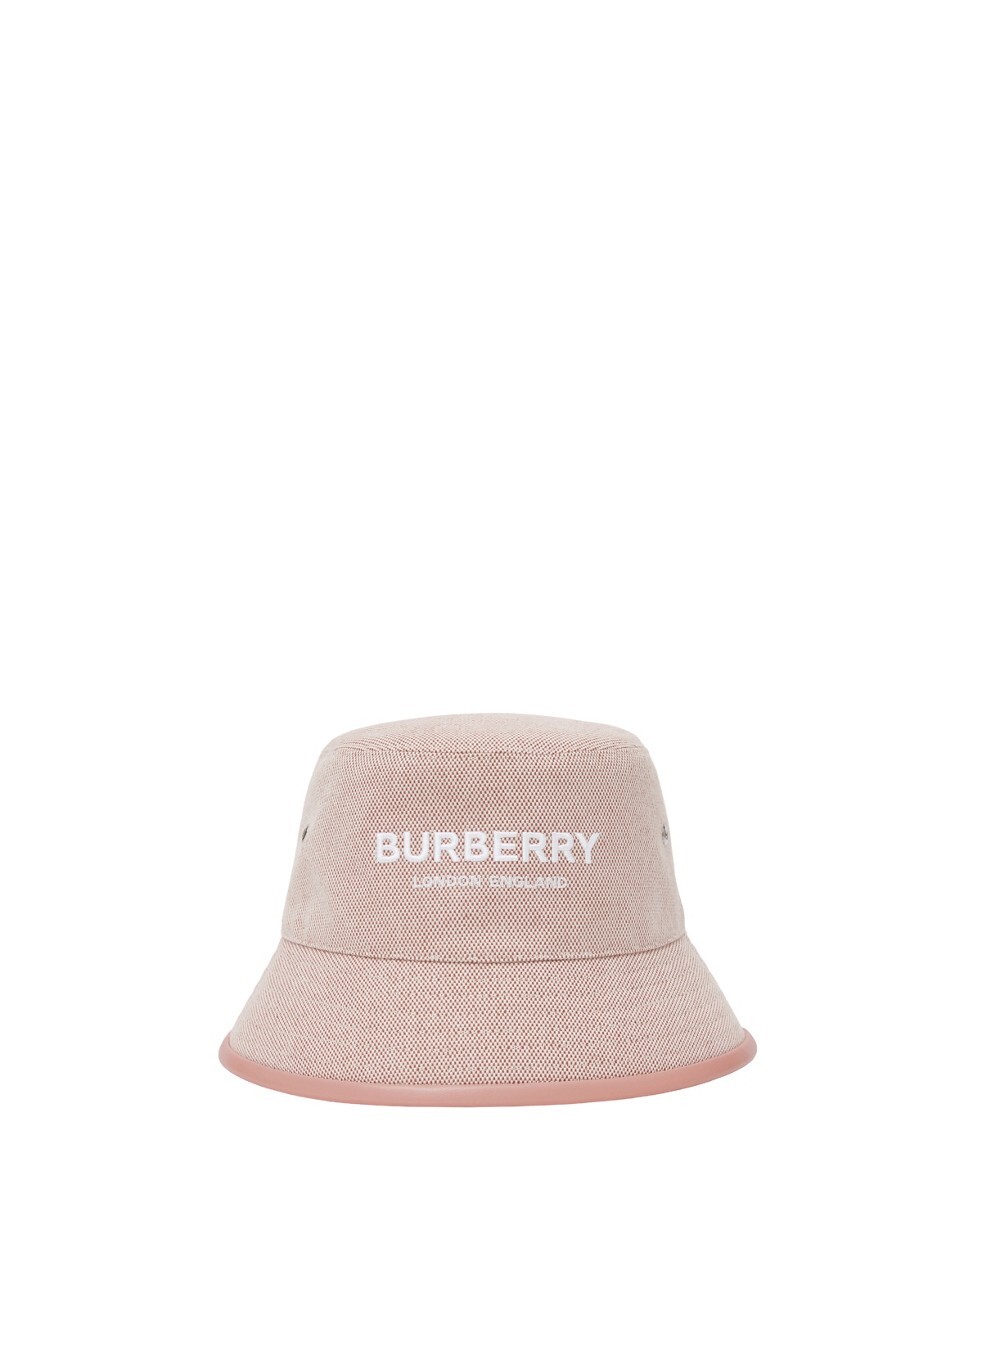 Burberry Embroidered logo cotton canvas bucket hat - Harvey Nichols